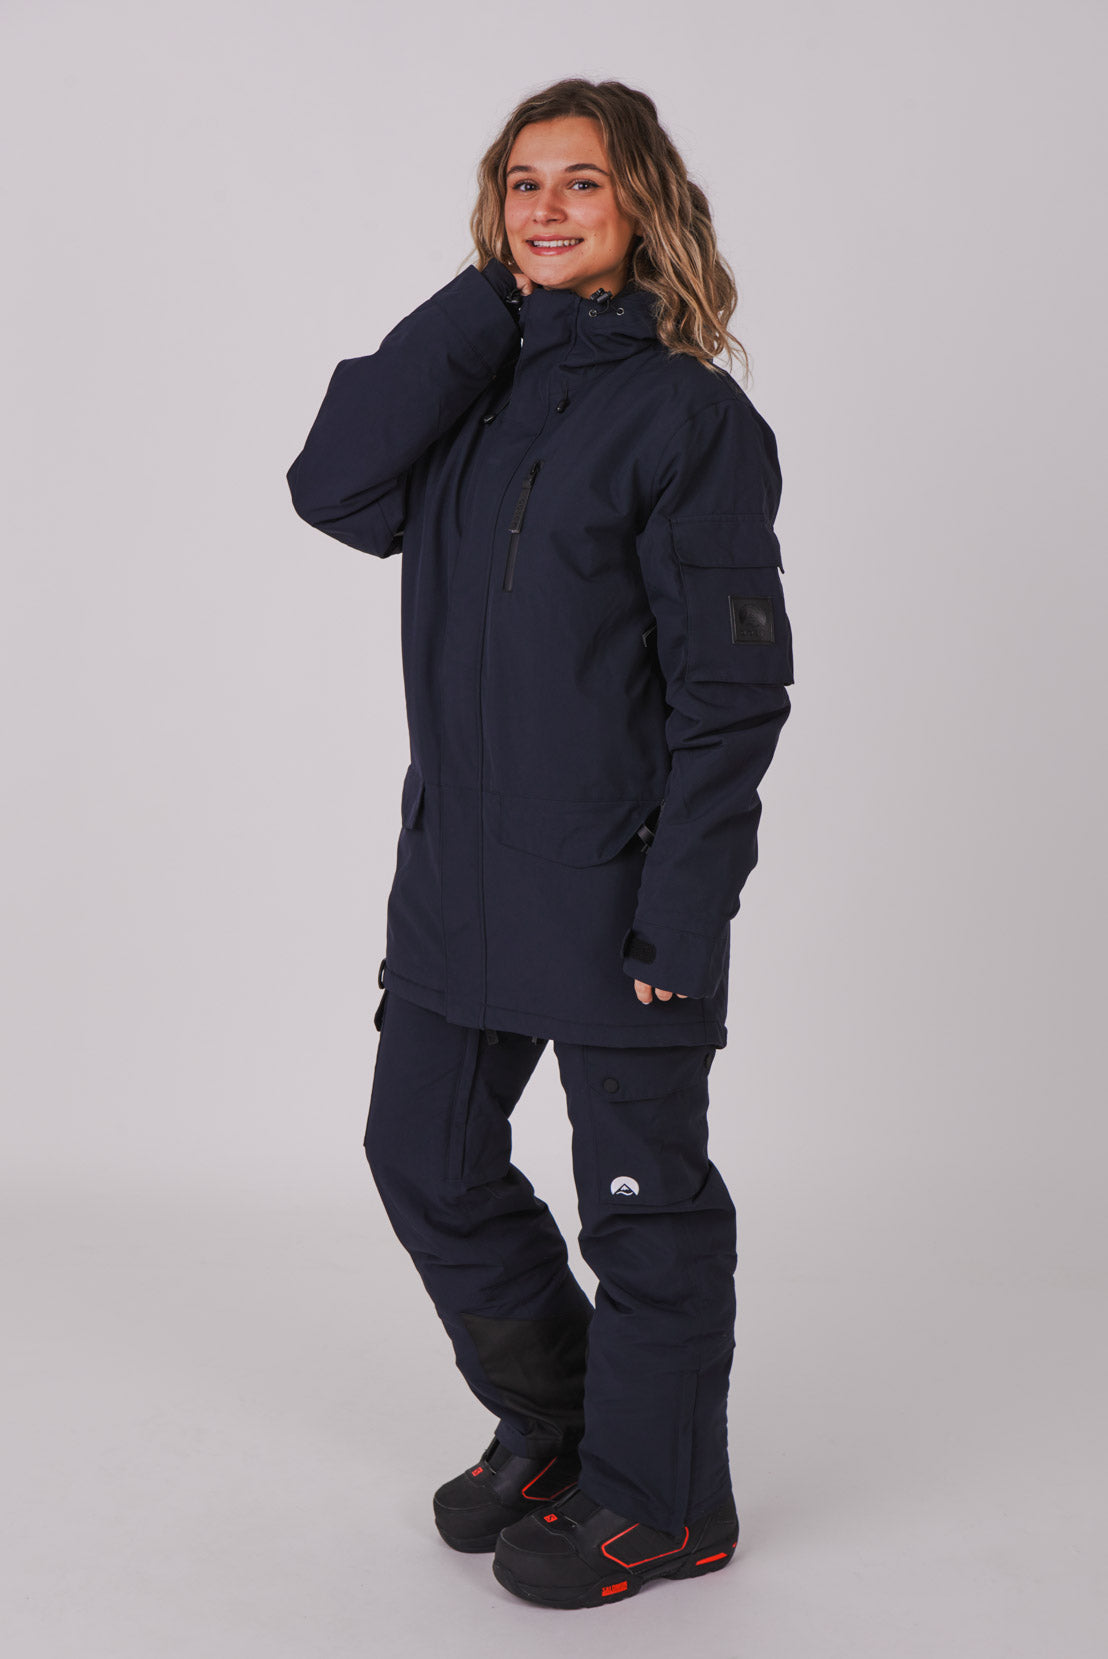 Yeh Girl Ski & Snowboard Jacket Black